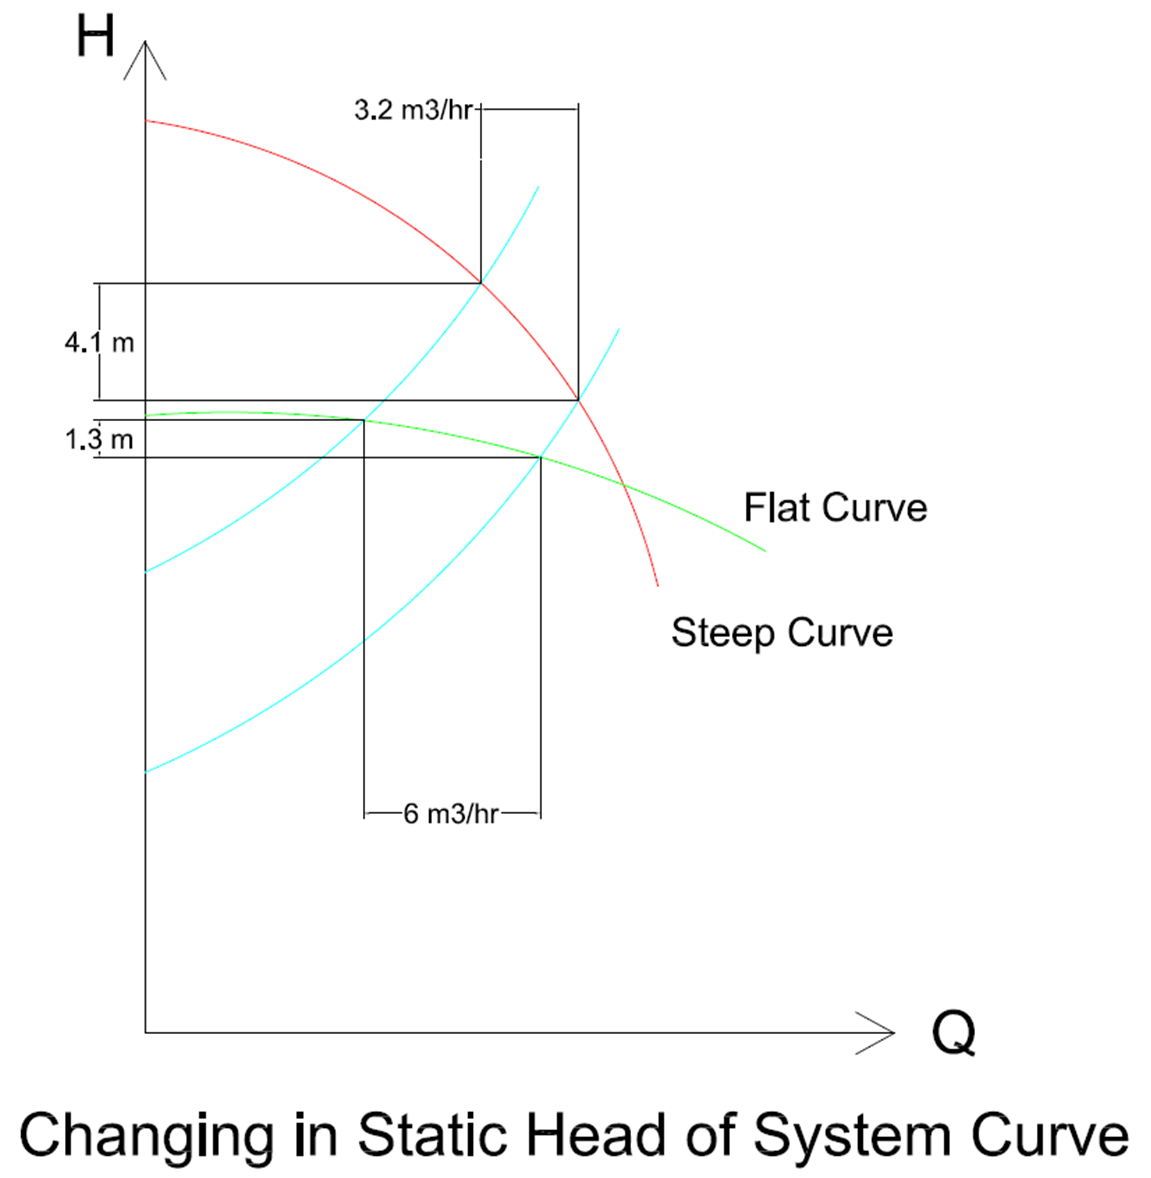 Steep curve vs Flat curve